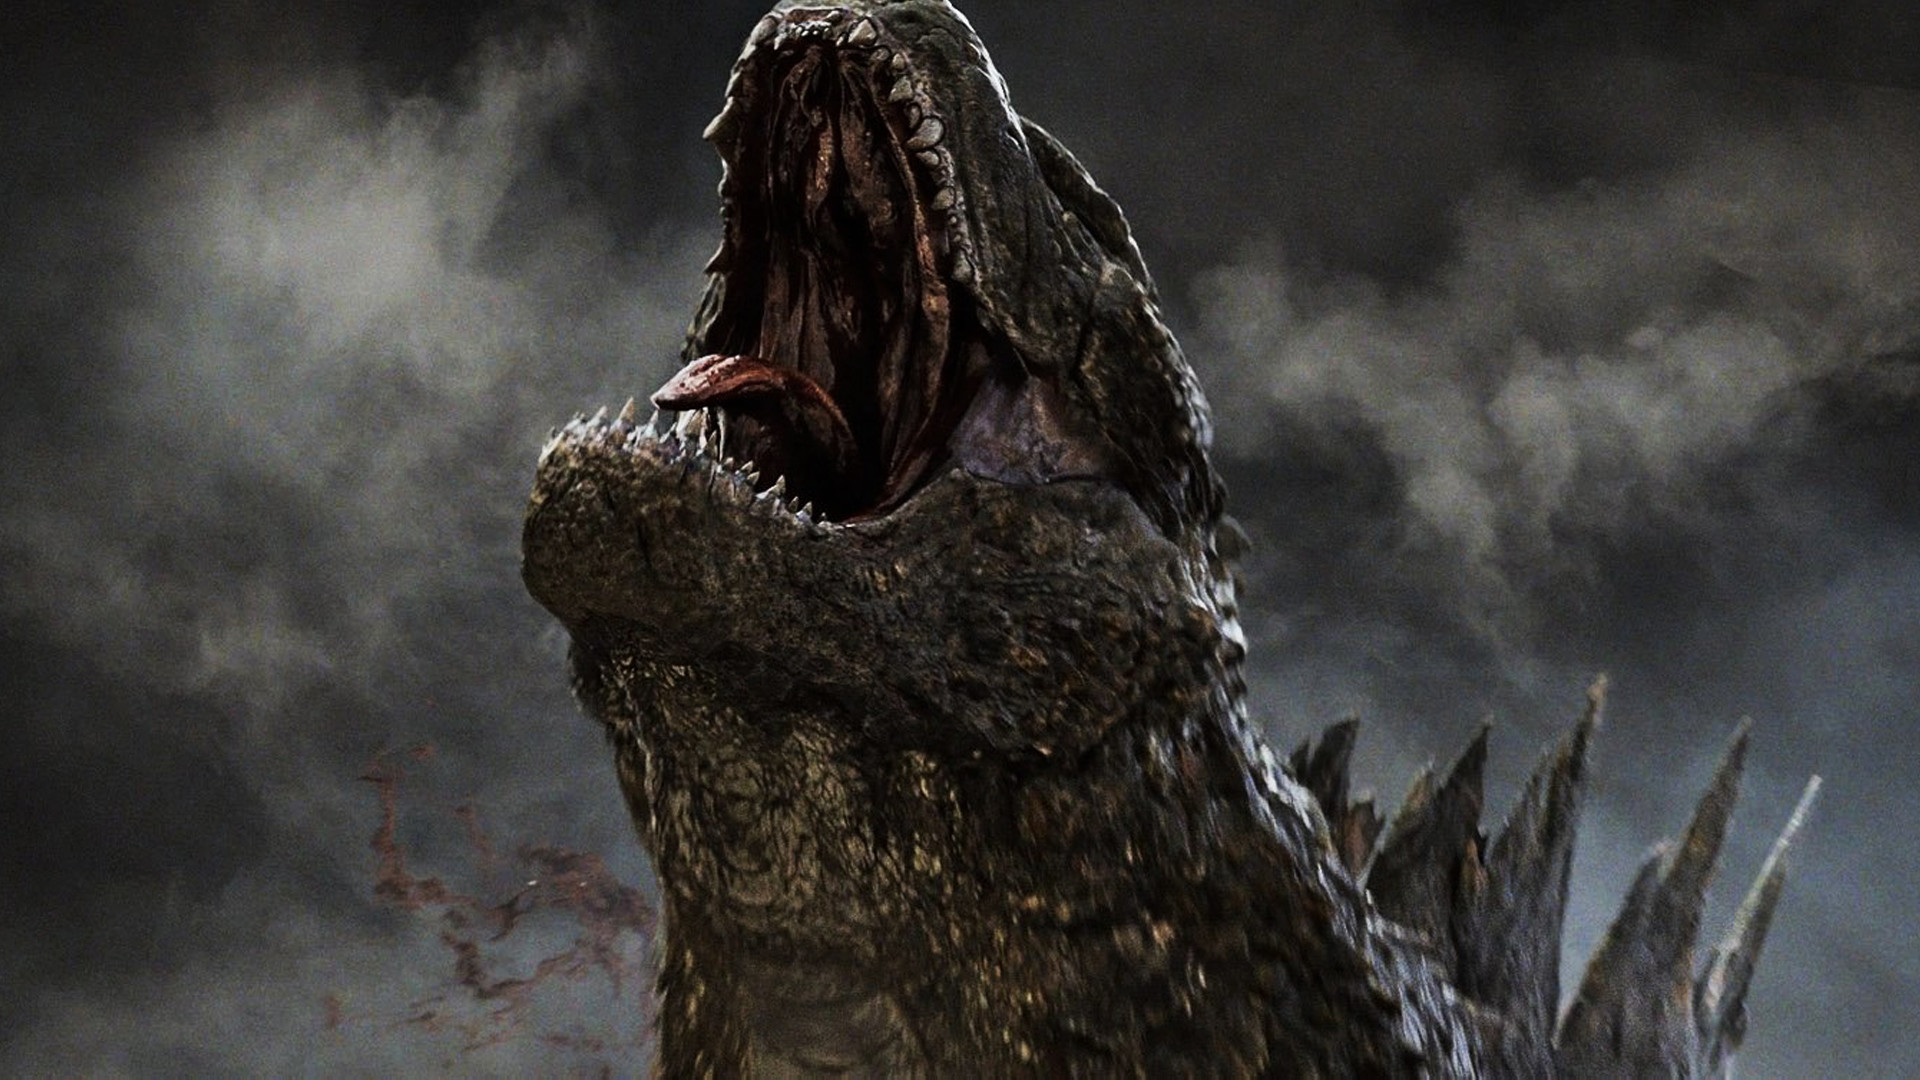 Godzilla 2014 movie hd roaring. 1080p wallpaper and